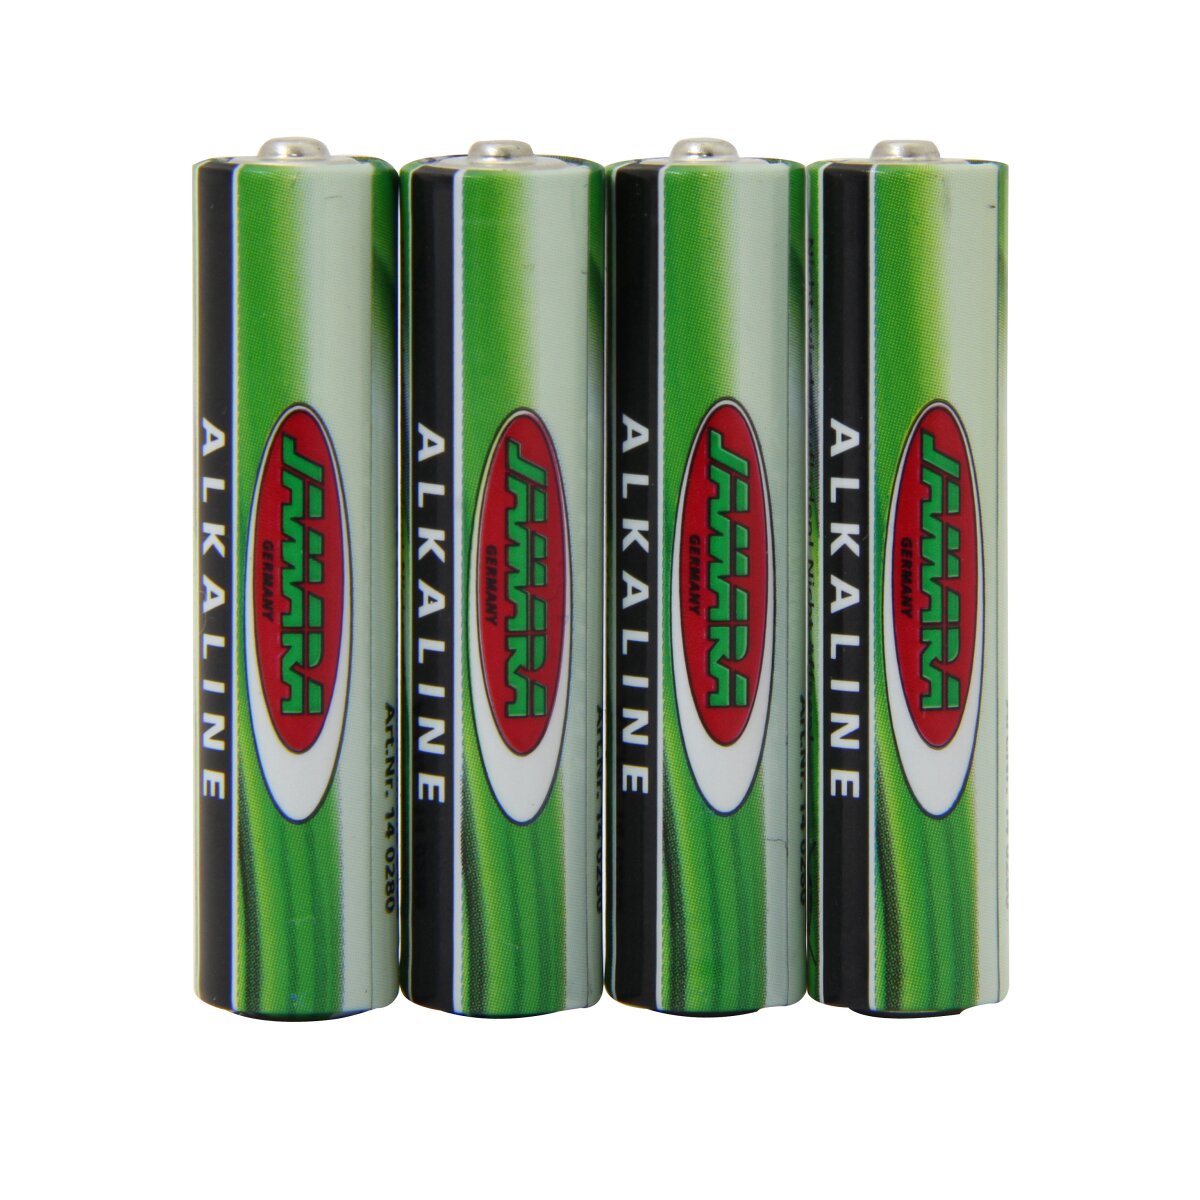 Batterie AAA Micro SuperC VE4 1,5V 1000mAh in Folie eingeschweisst 